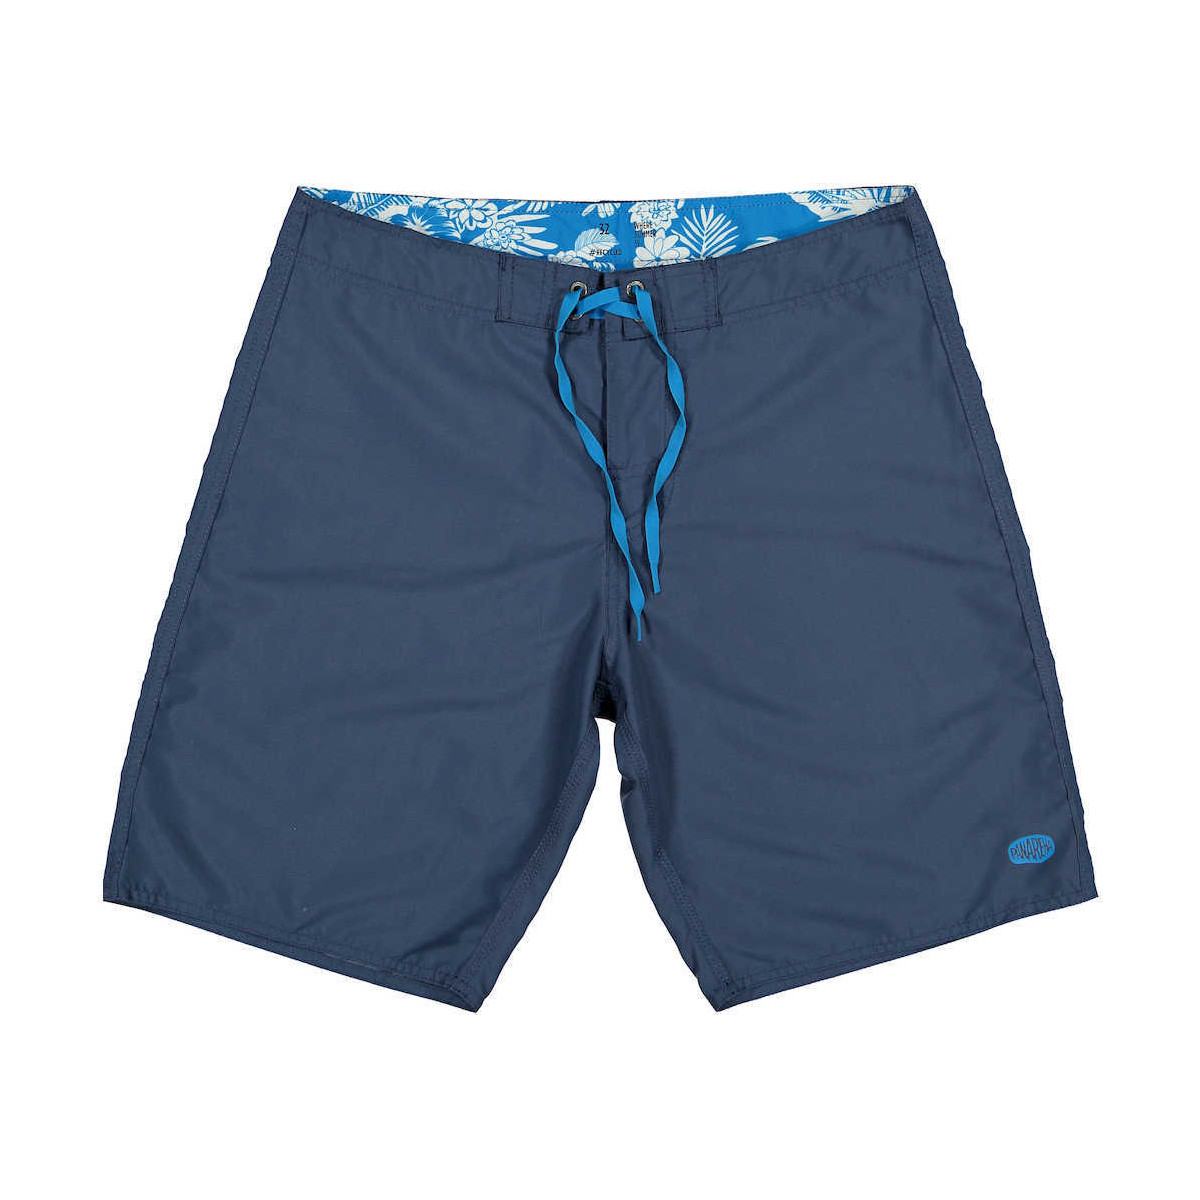 Vêtements Homme Maillots / Shorts de bain Panareha KUTA Bleu